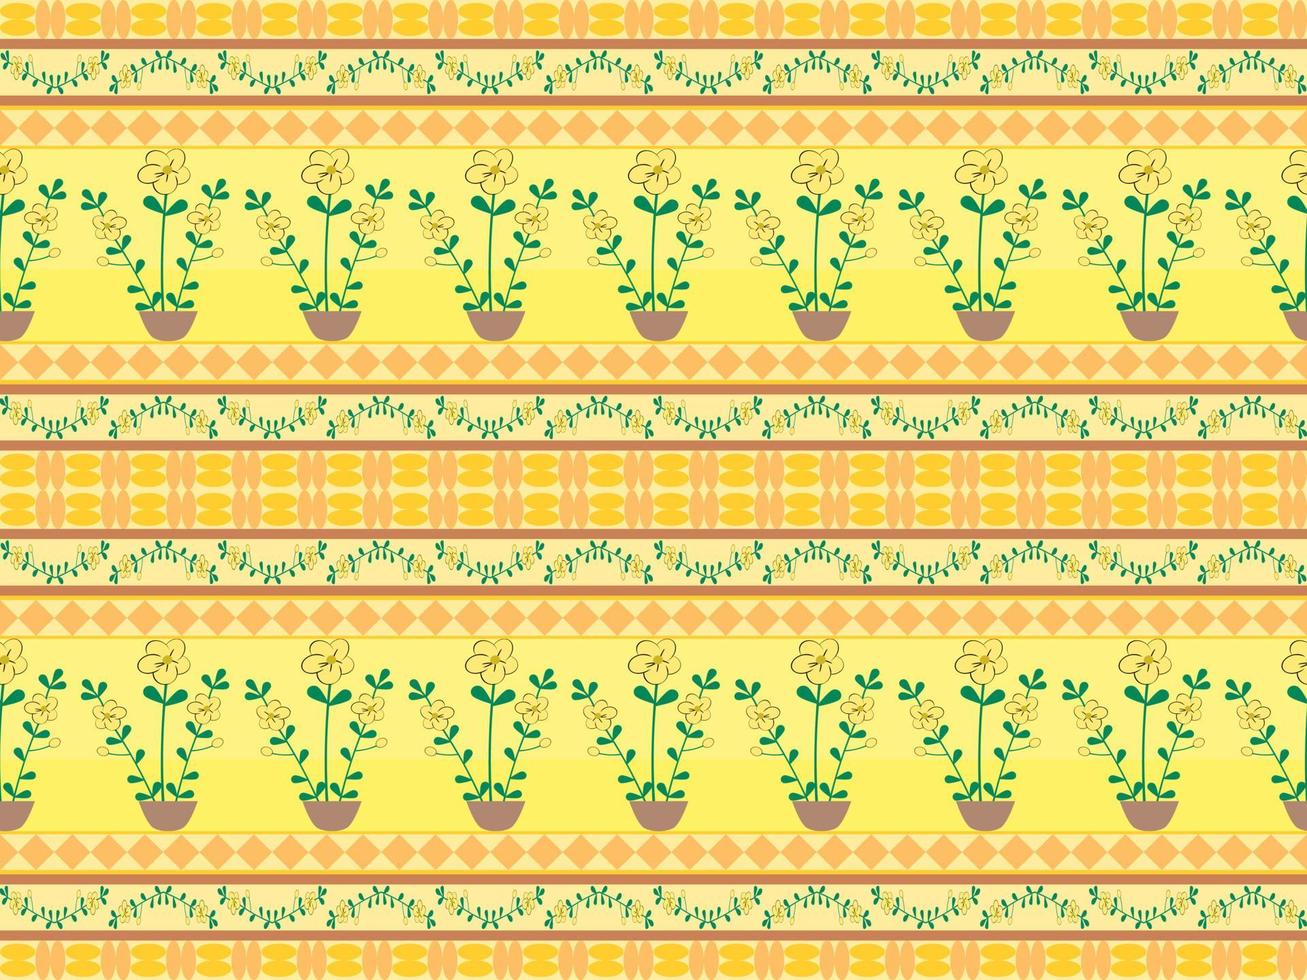 blomma seamless mönster på gul bakgrund vektor